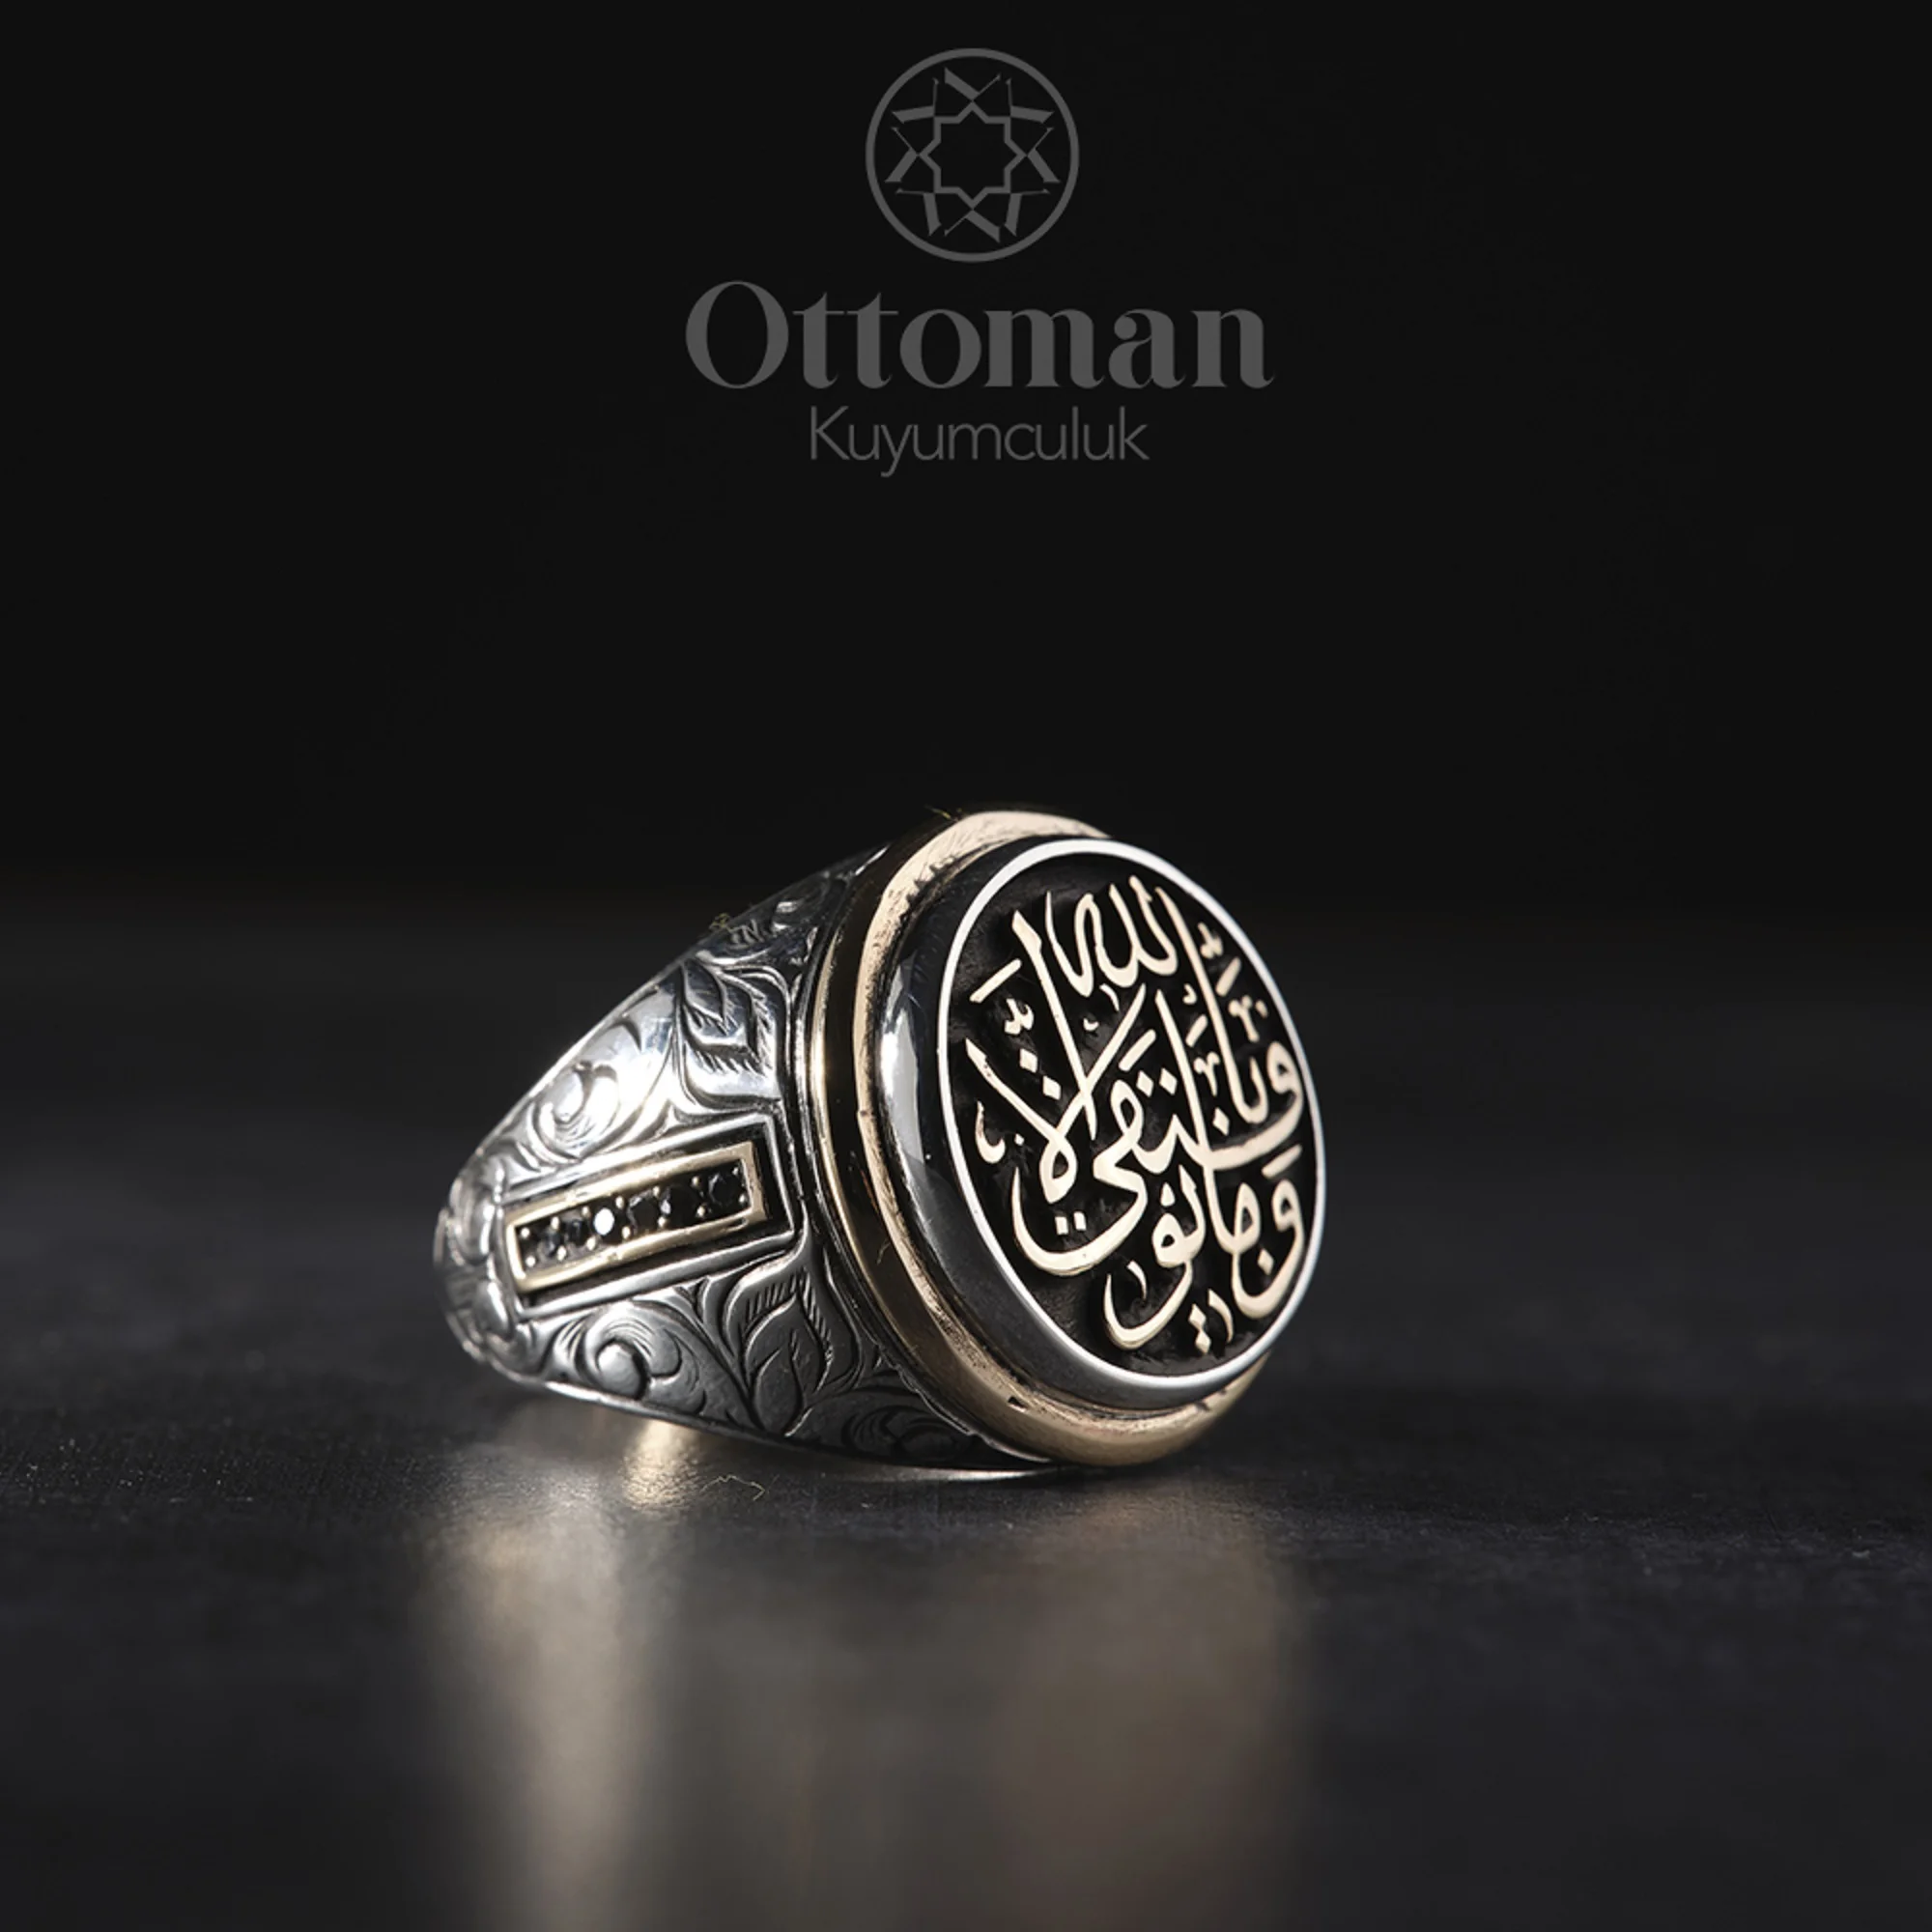 Name Round Black Silver Men's Ring Handmade Adjustable and Customizable Ring Ottoman Motif Ring Name Ring Oval Ring Men's Gift garden pallet ottoman wood black